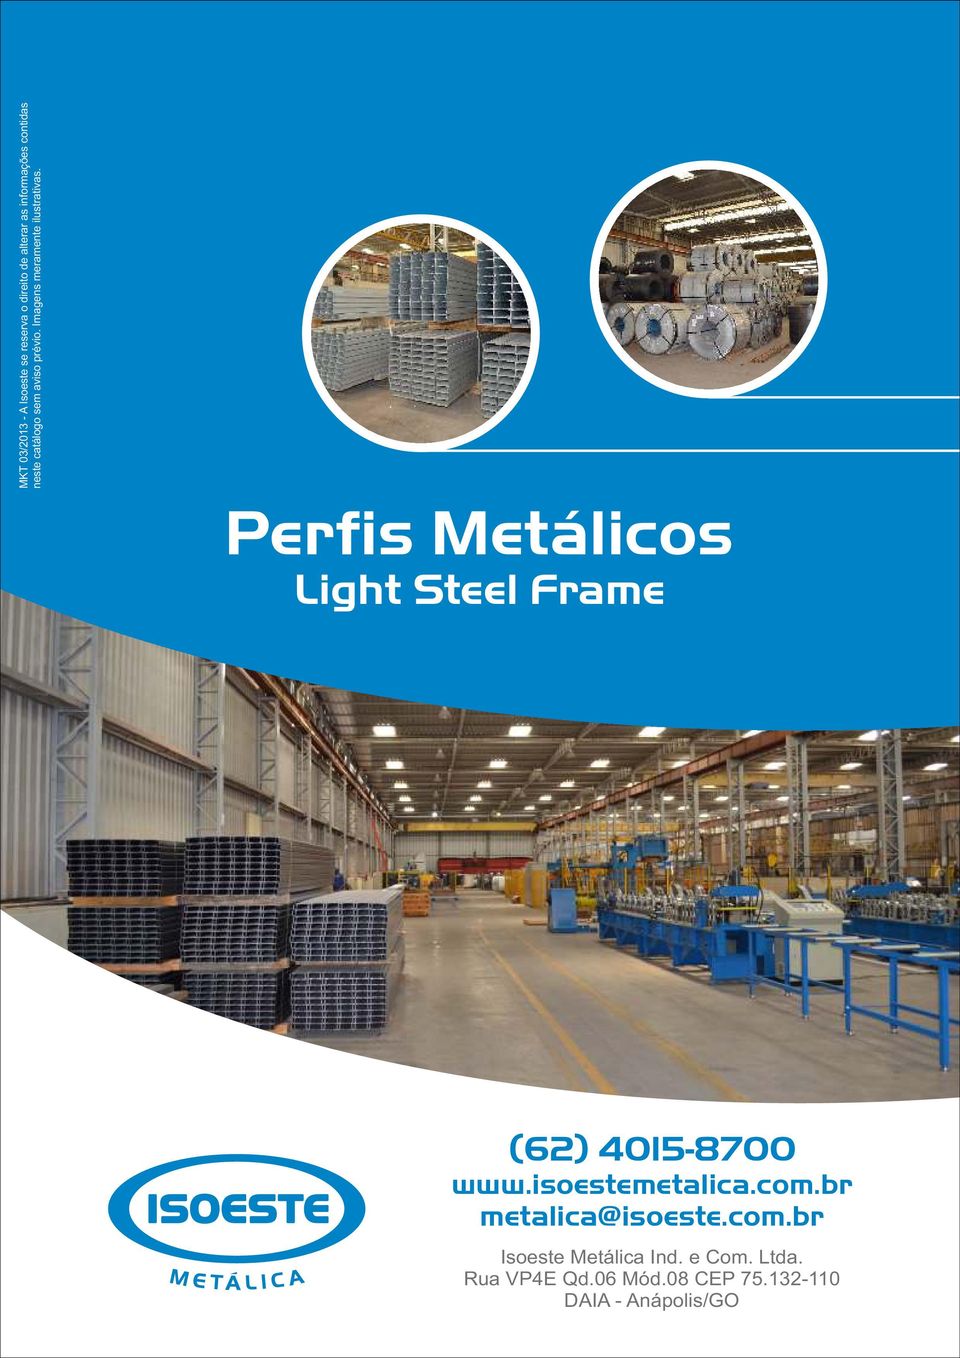 Perfis Metálicos Light Steel Frame (62) 4015-8700 www.isoestemetalica.com.